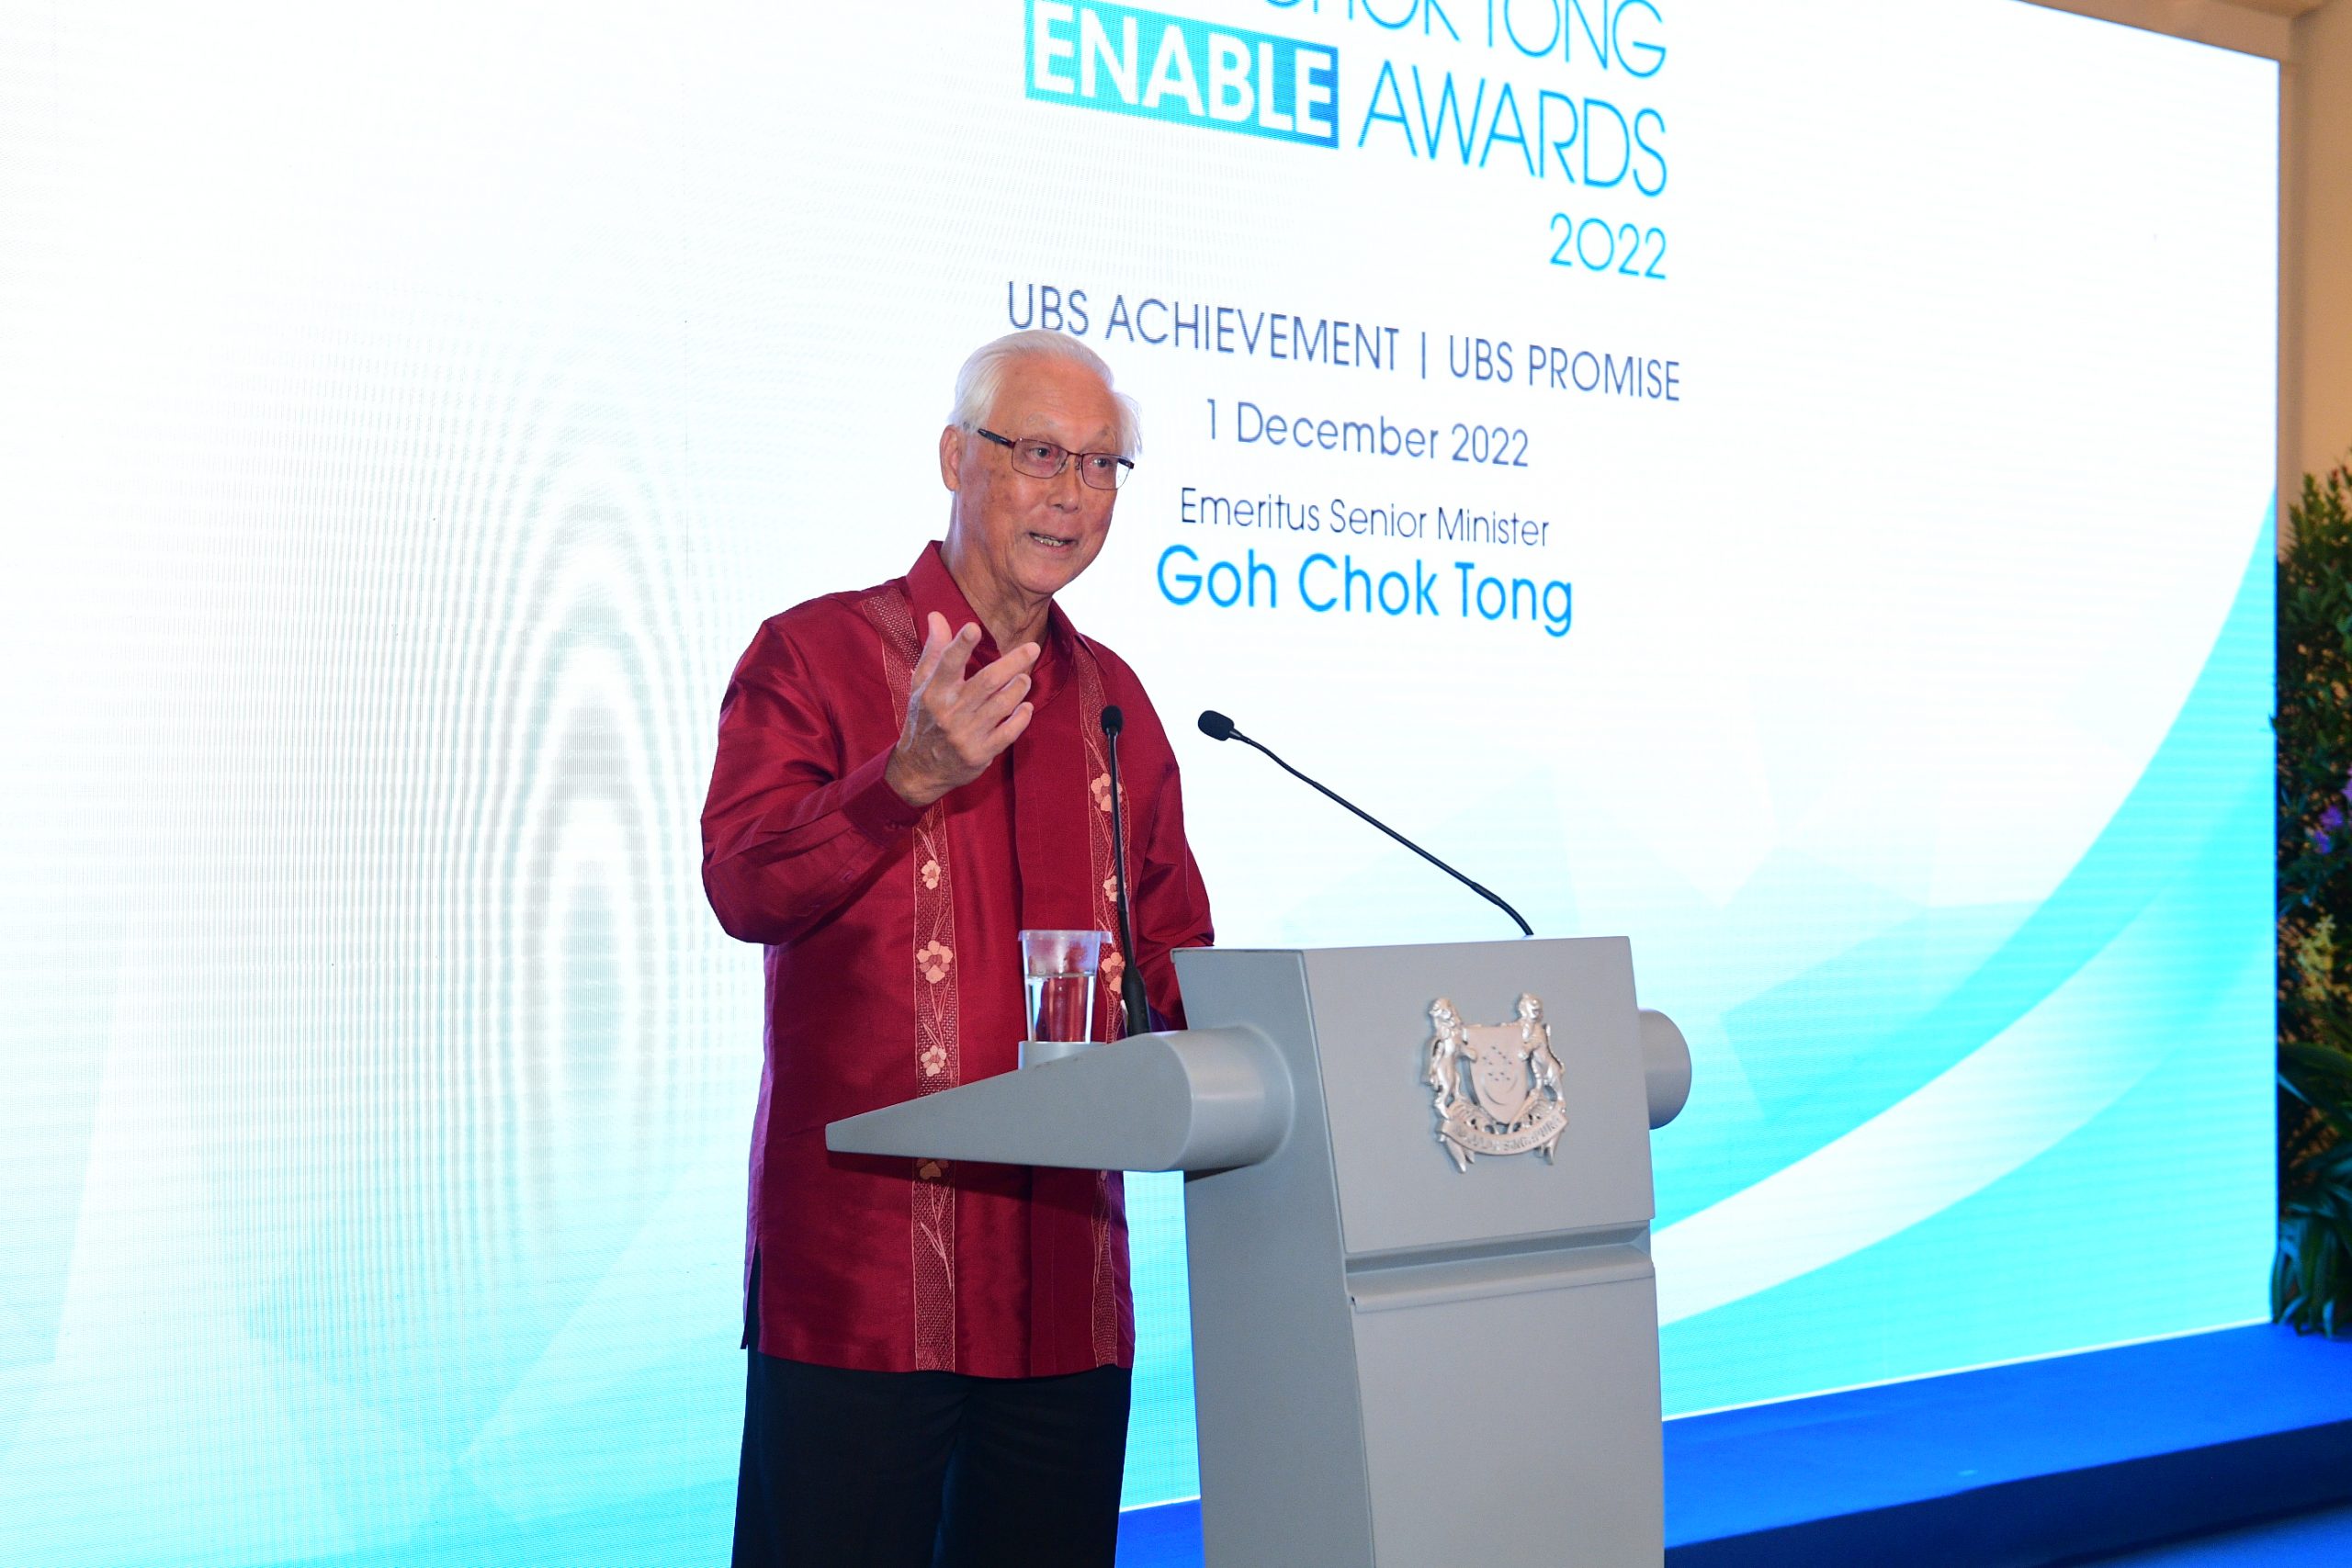 Photos show Emeritus Senior Minister Goh Chok Tong giving a speech.